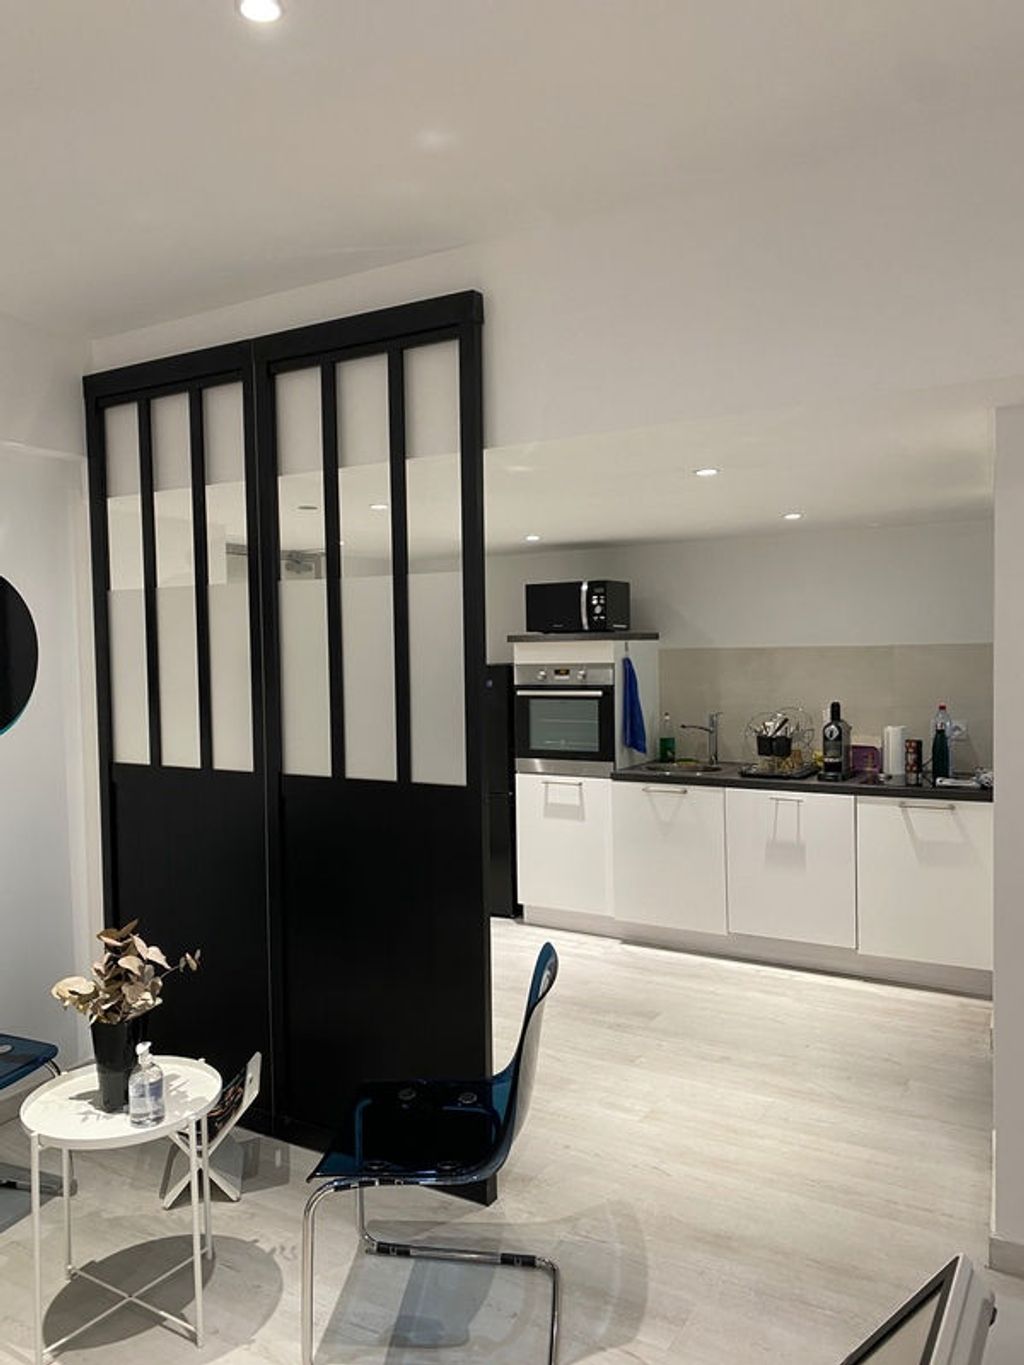 Achat appartement 4 pièces 80 m² - Oyonnax